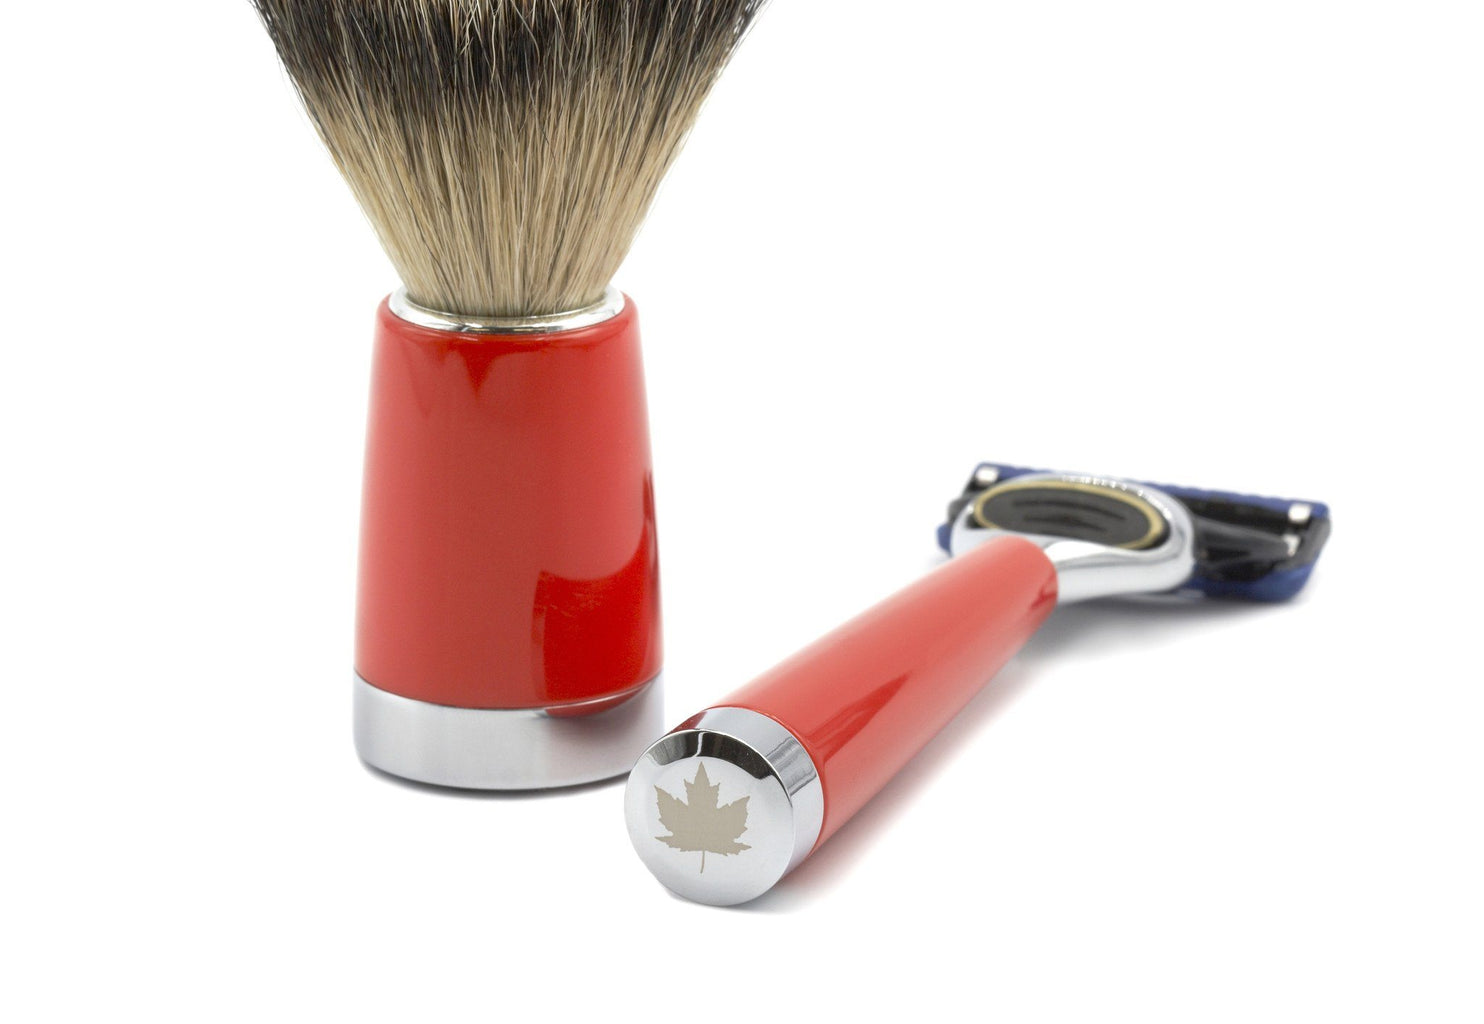 "True North" 3-Piece Shaving Set with Gillette Fusion Razor and Silvertip Badger Brush Shaving Kit Fendrihan 